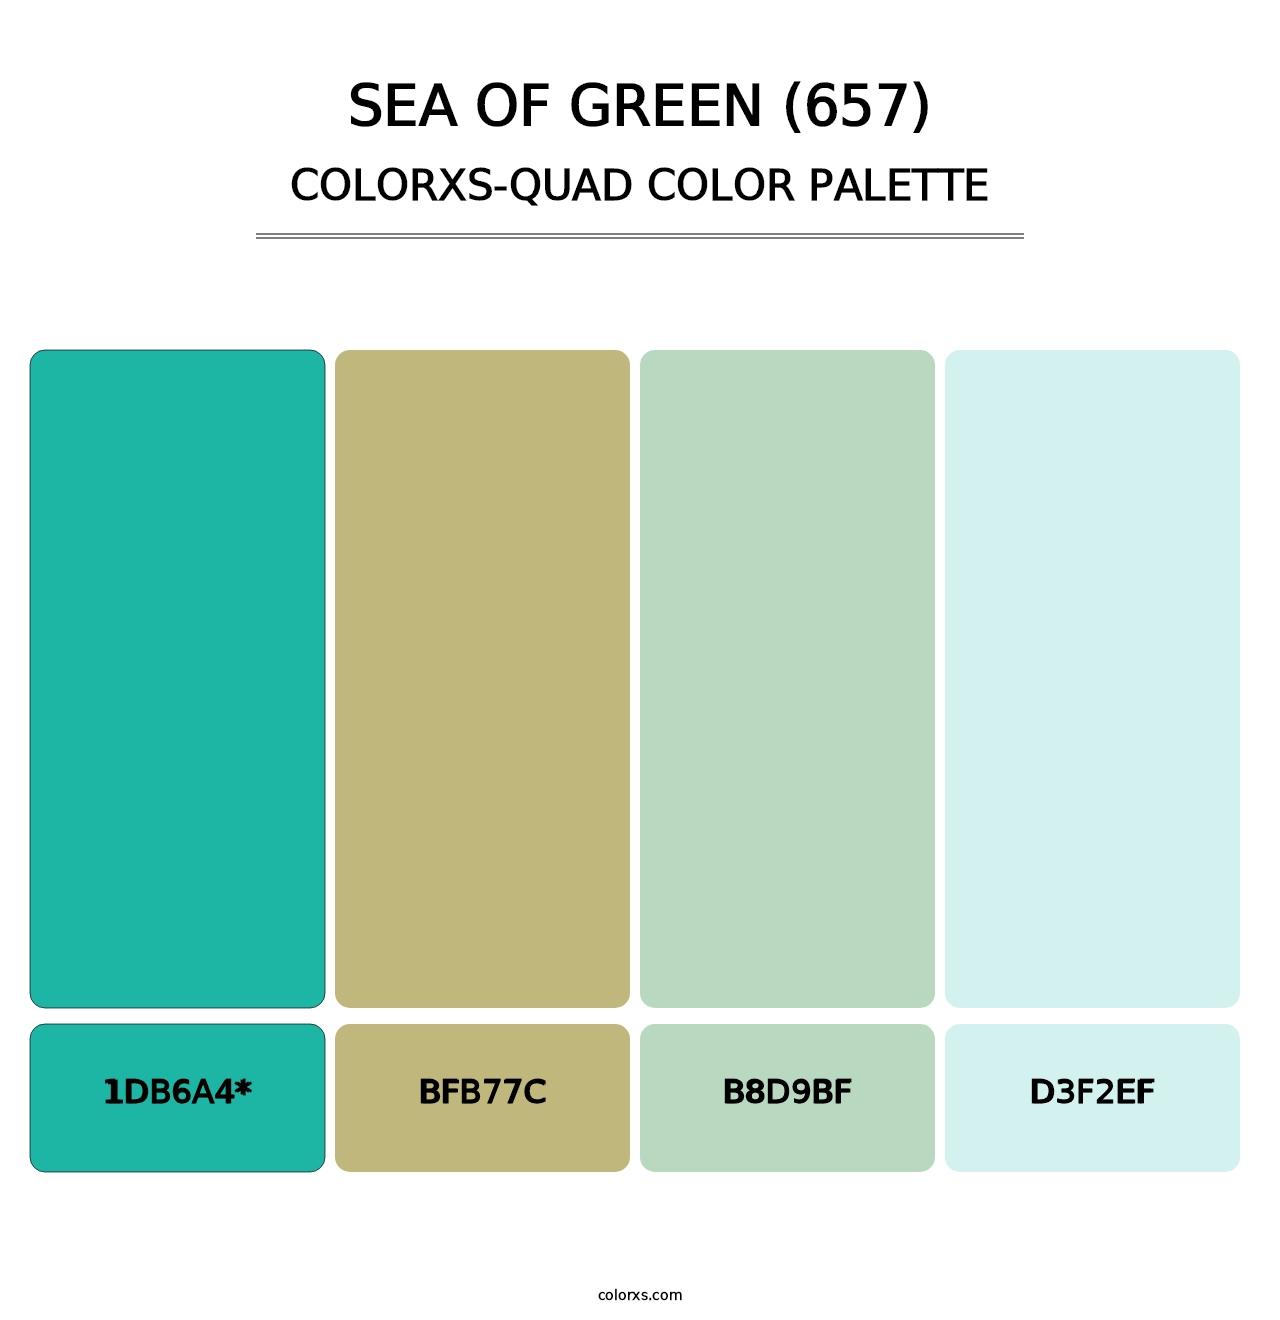 Sea of Green (657) - Colorxs Quad Palette